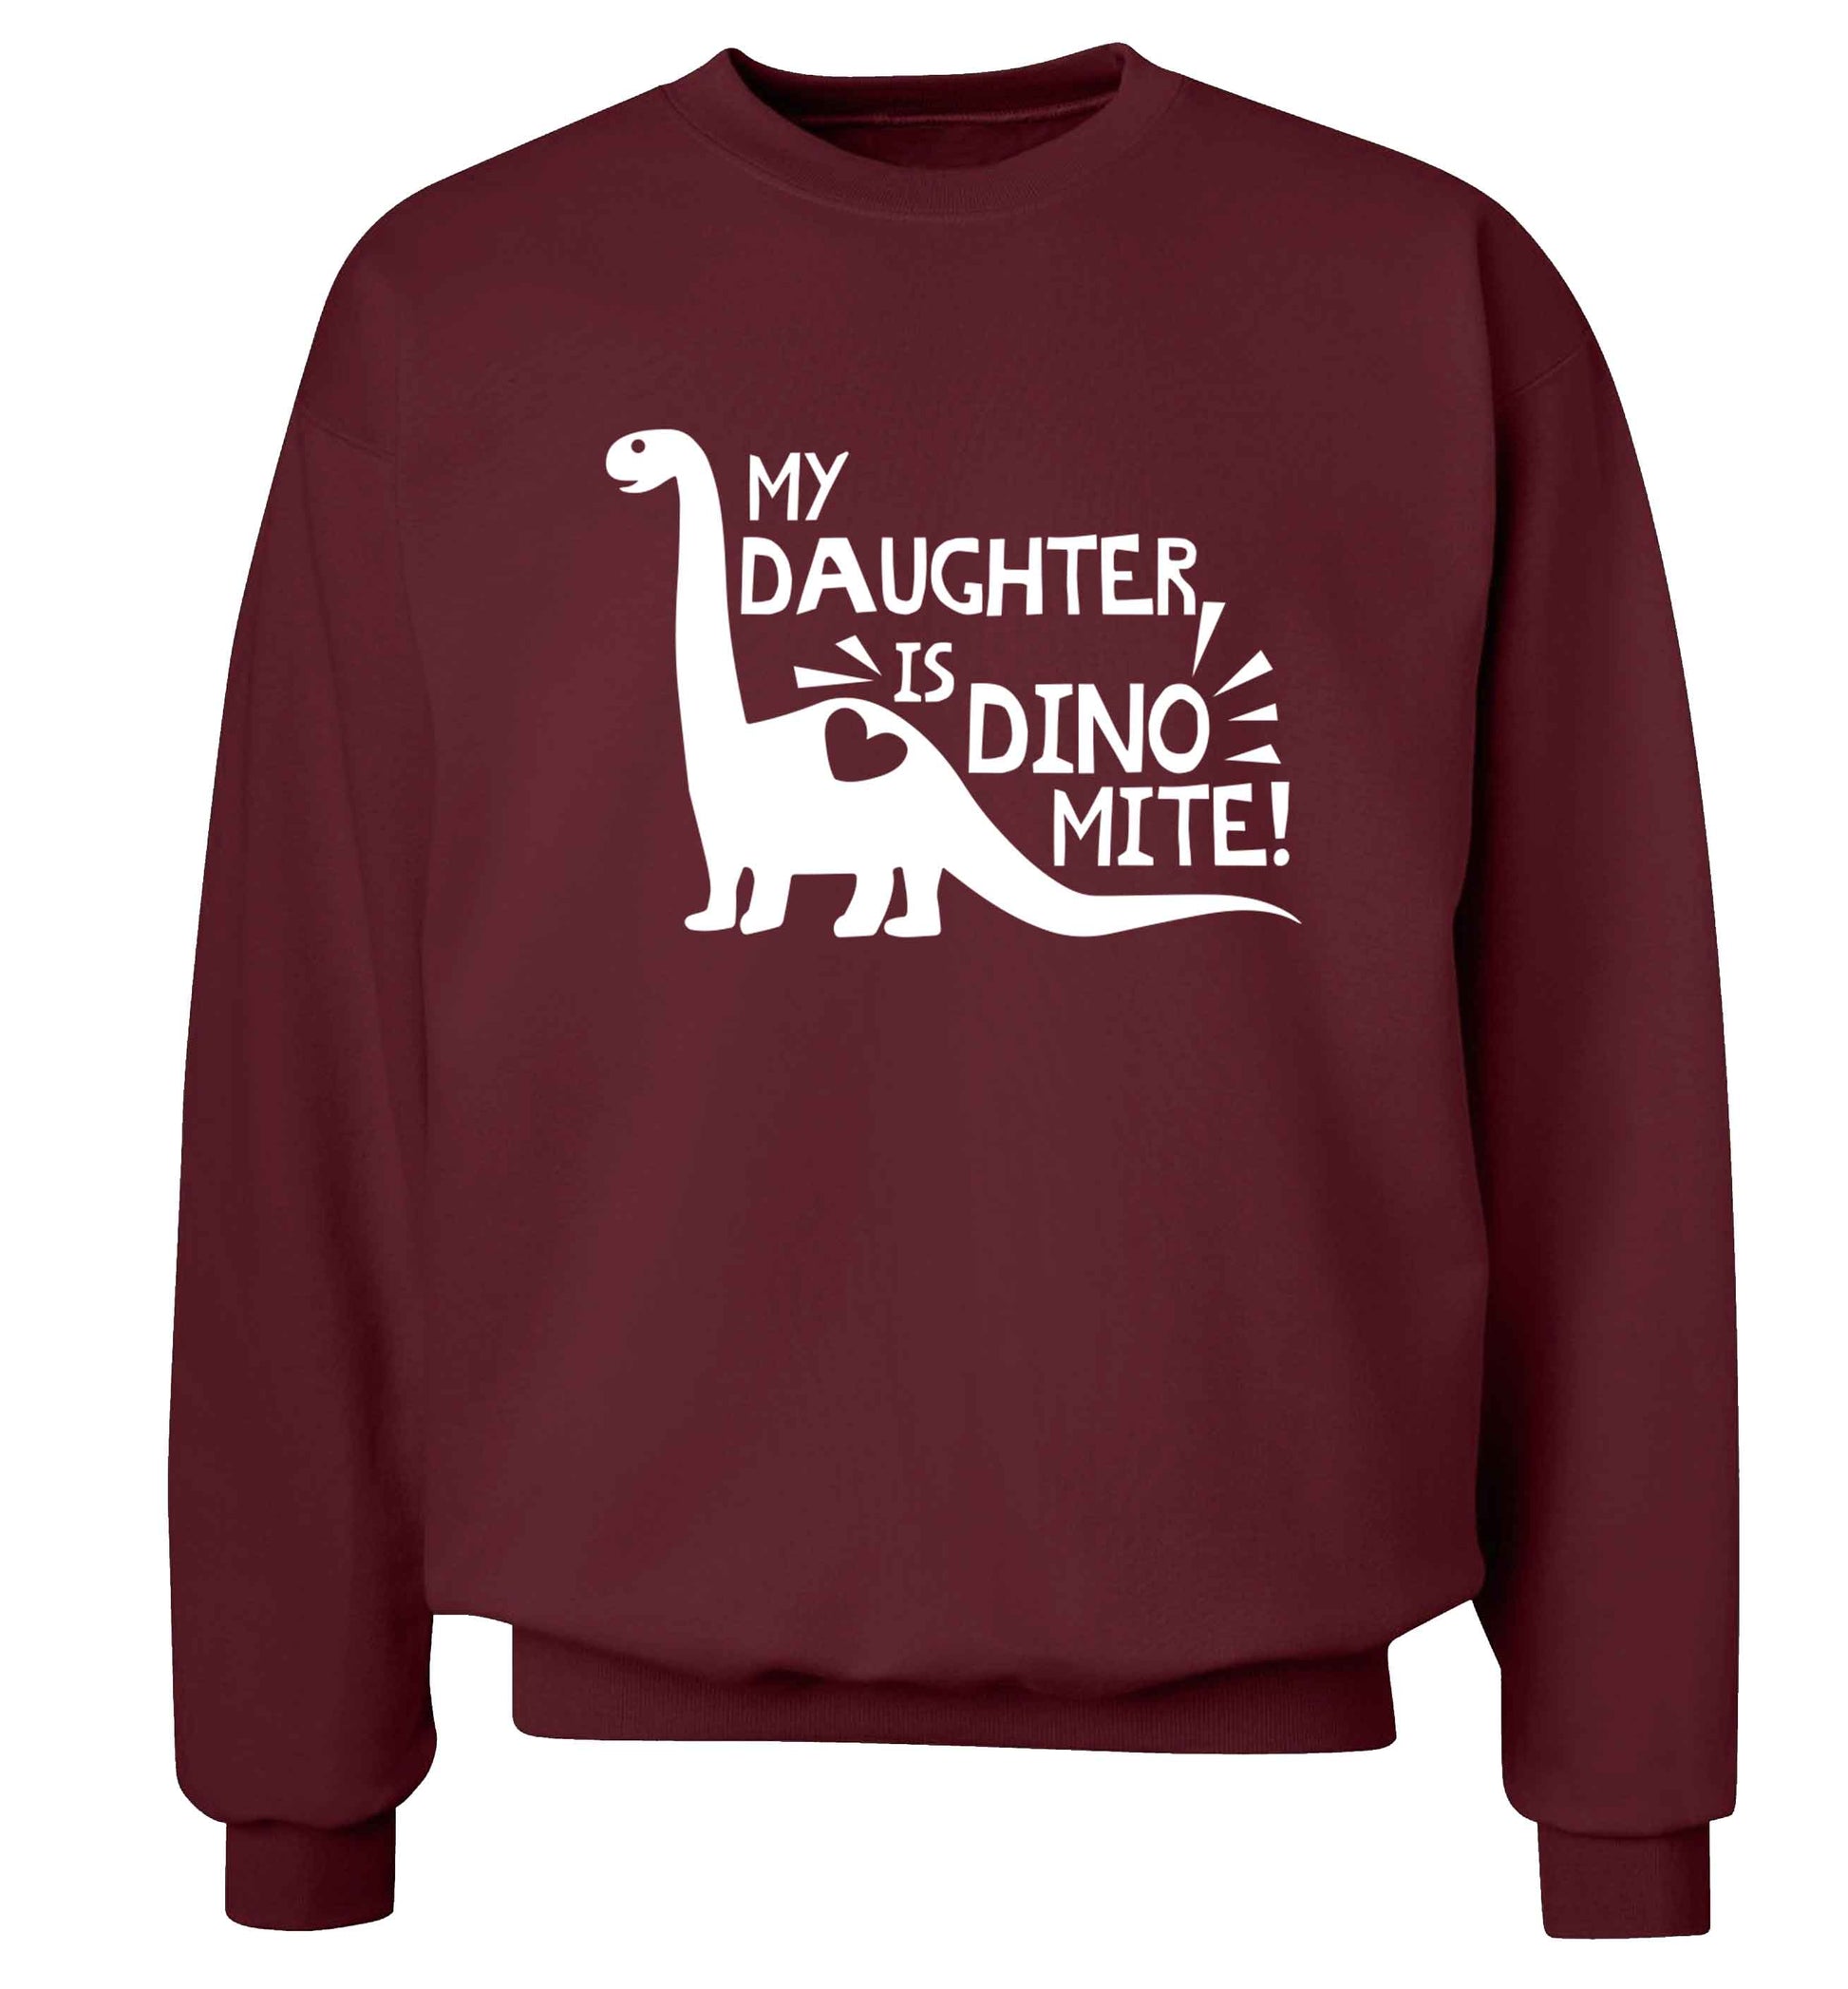 My daughter is dinomite! Adult's unisex maroon Sweater 2XL